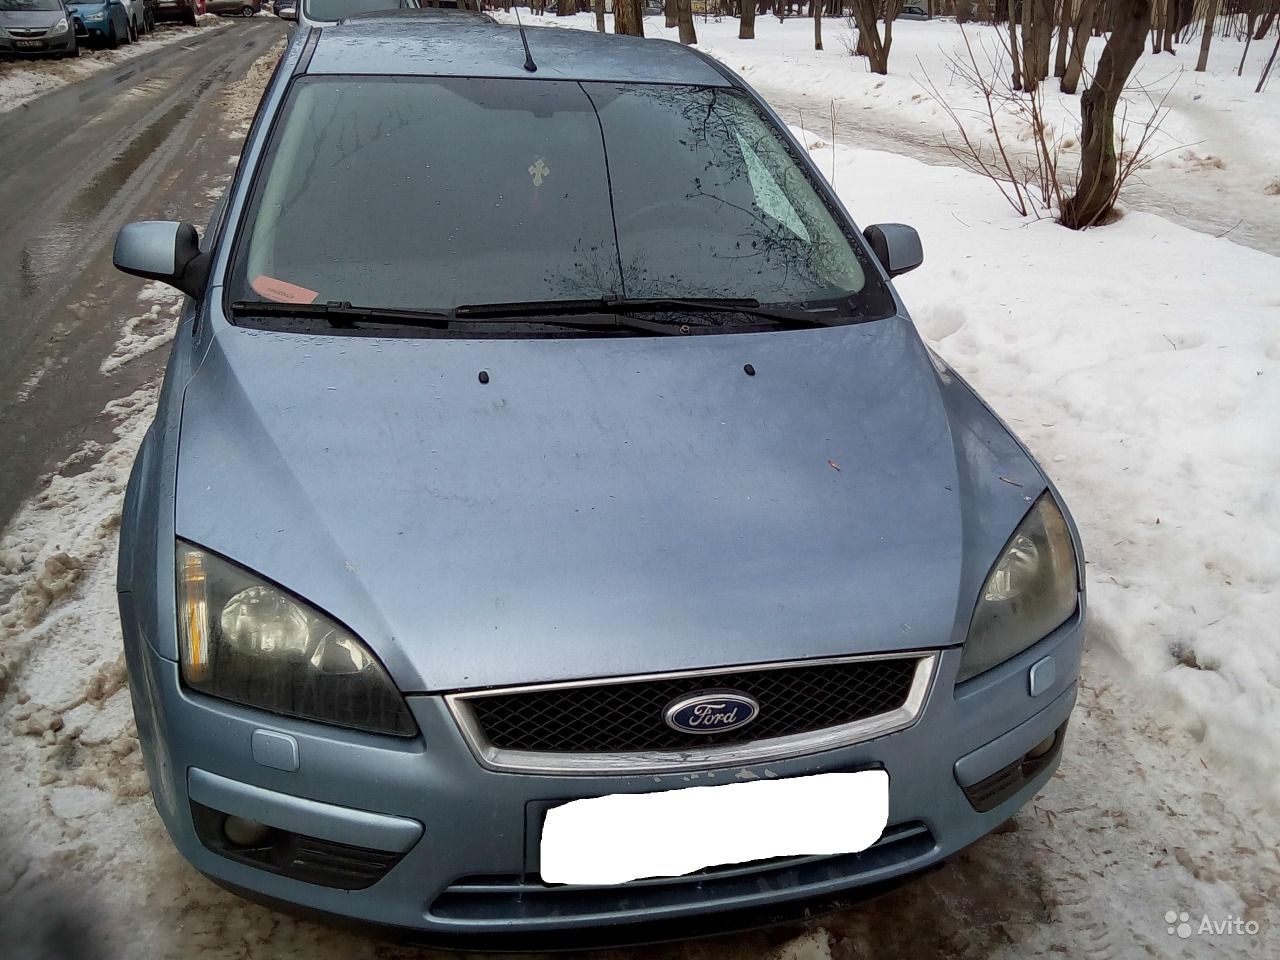 Купить ford focus - avito.ru